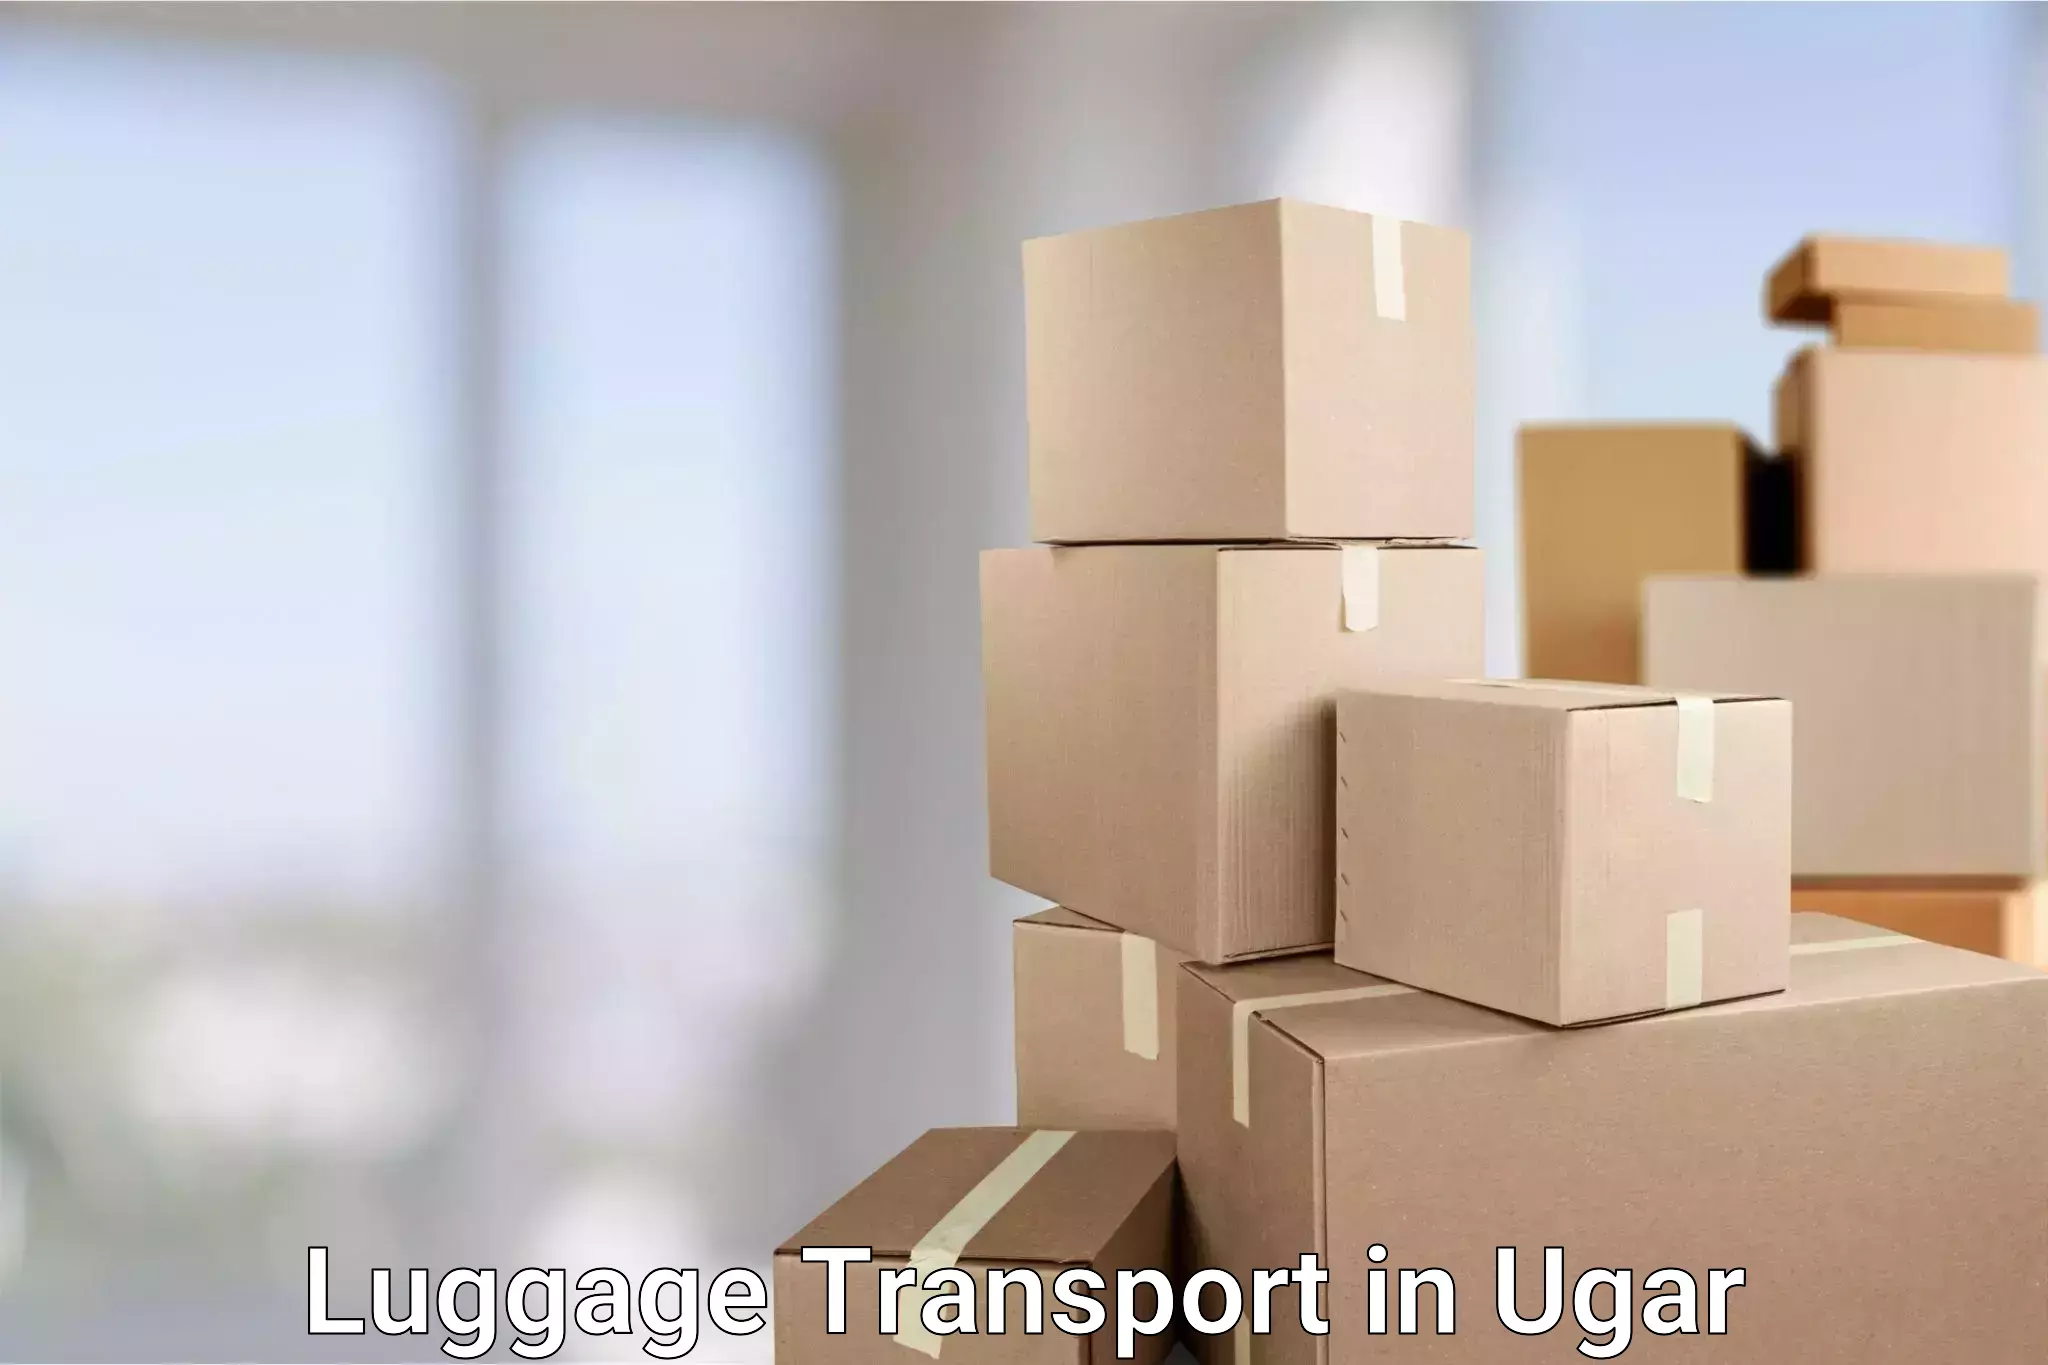 Luggage shipment tracking in Ugar